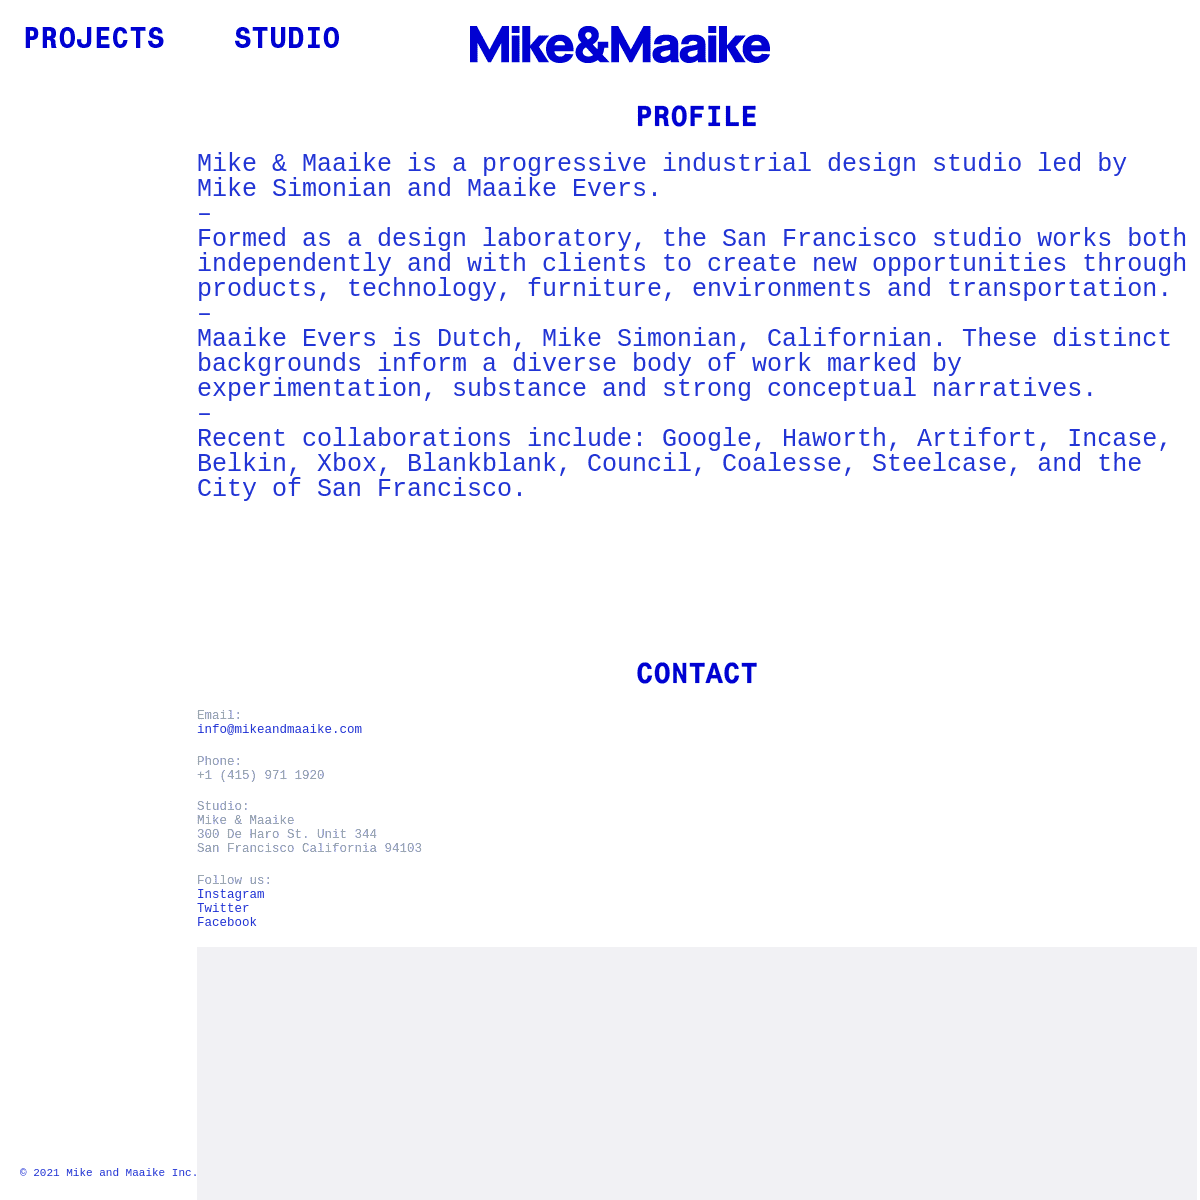 A complete backup of https://mikeandmaaike.com